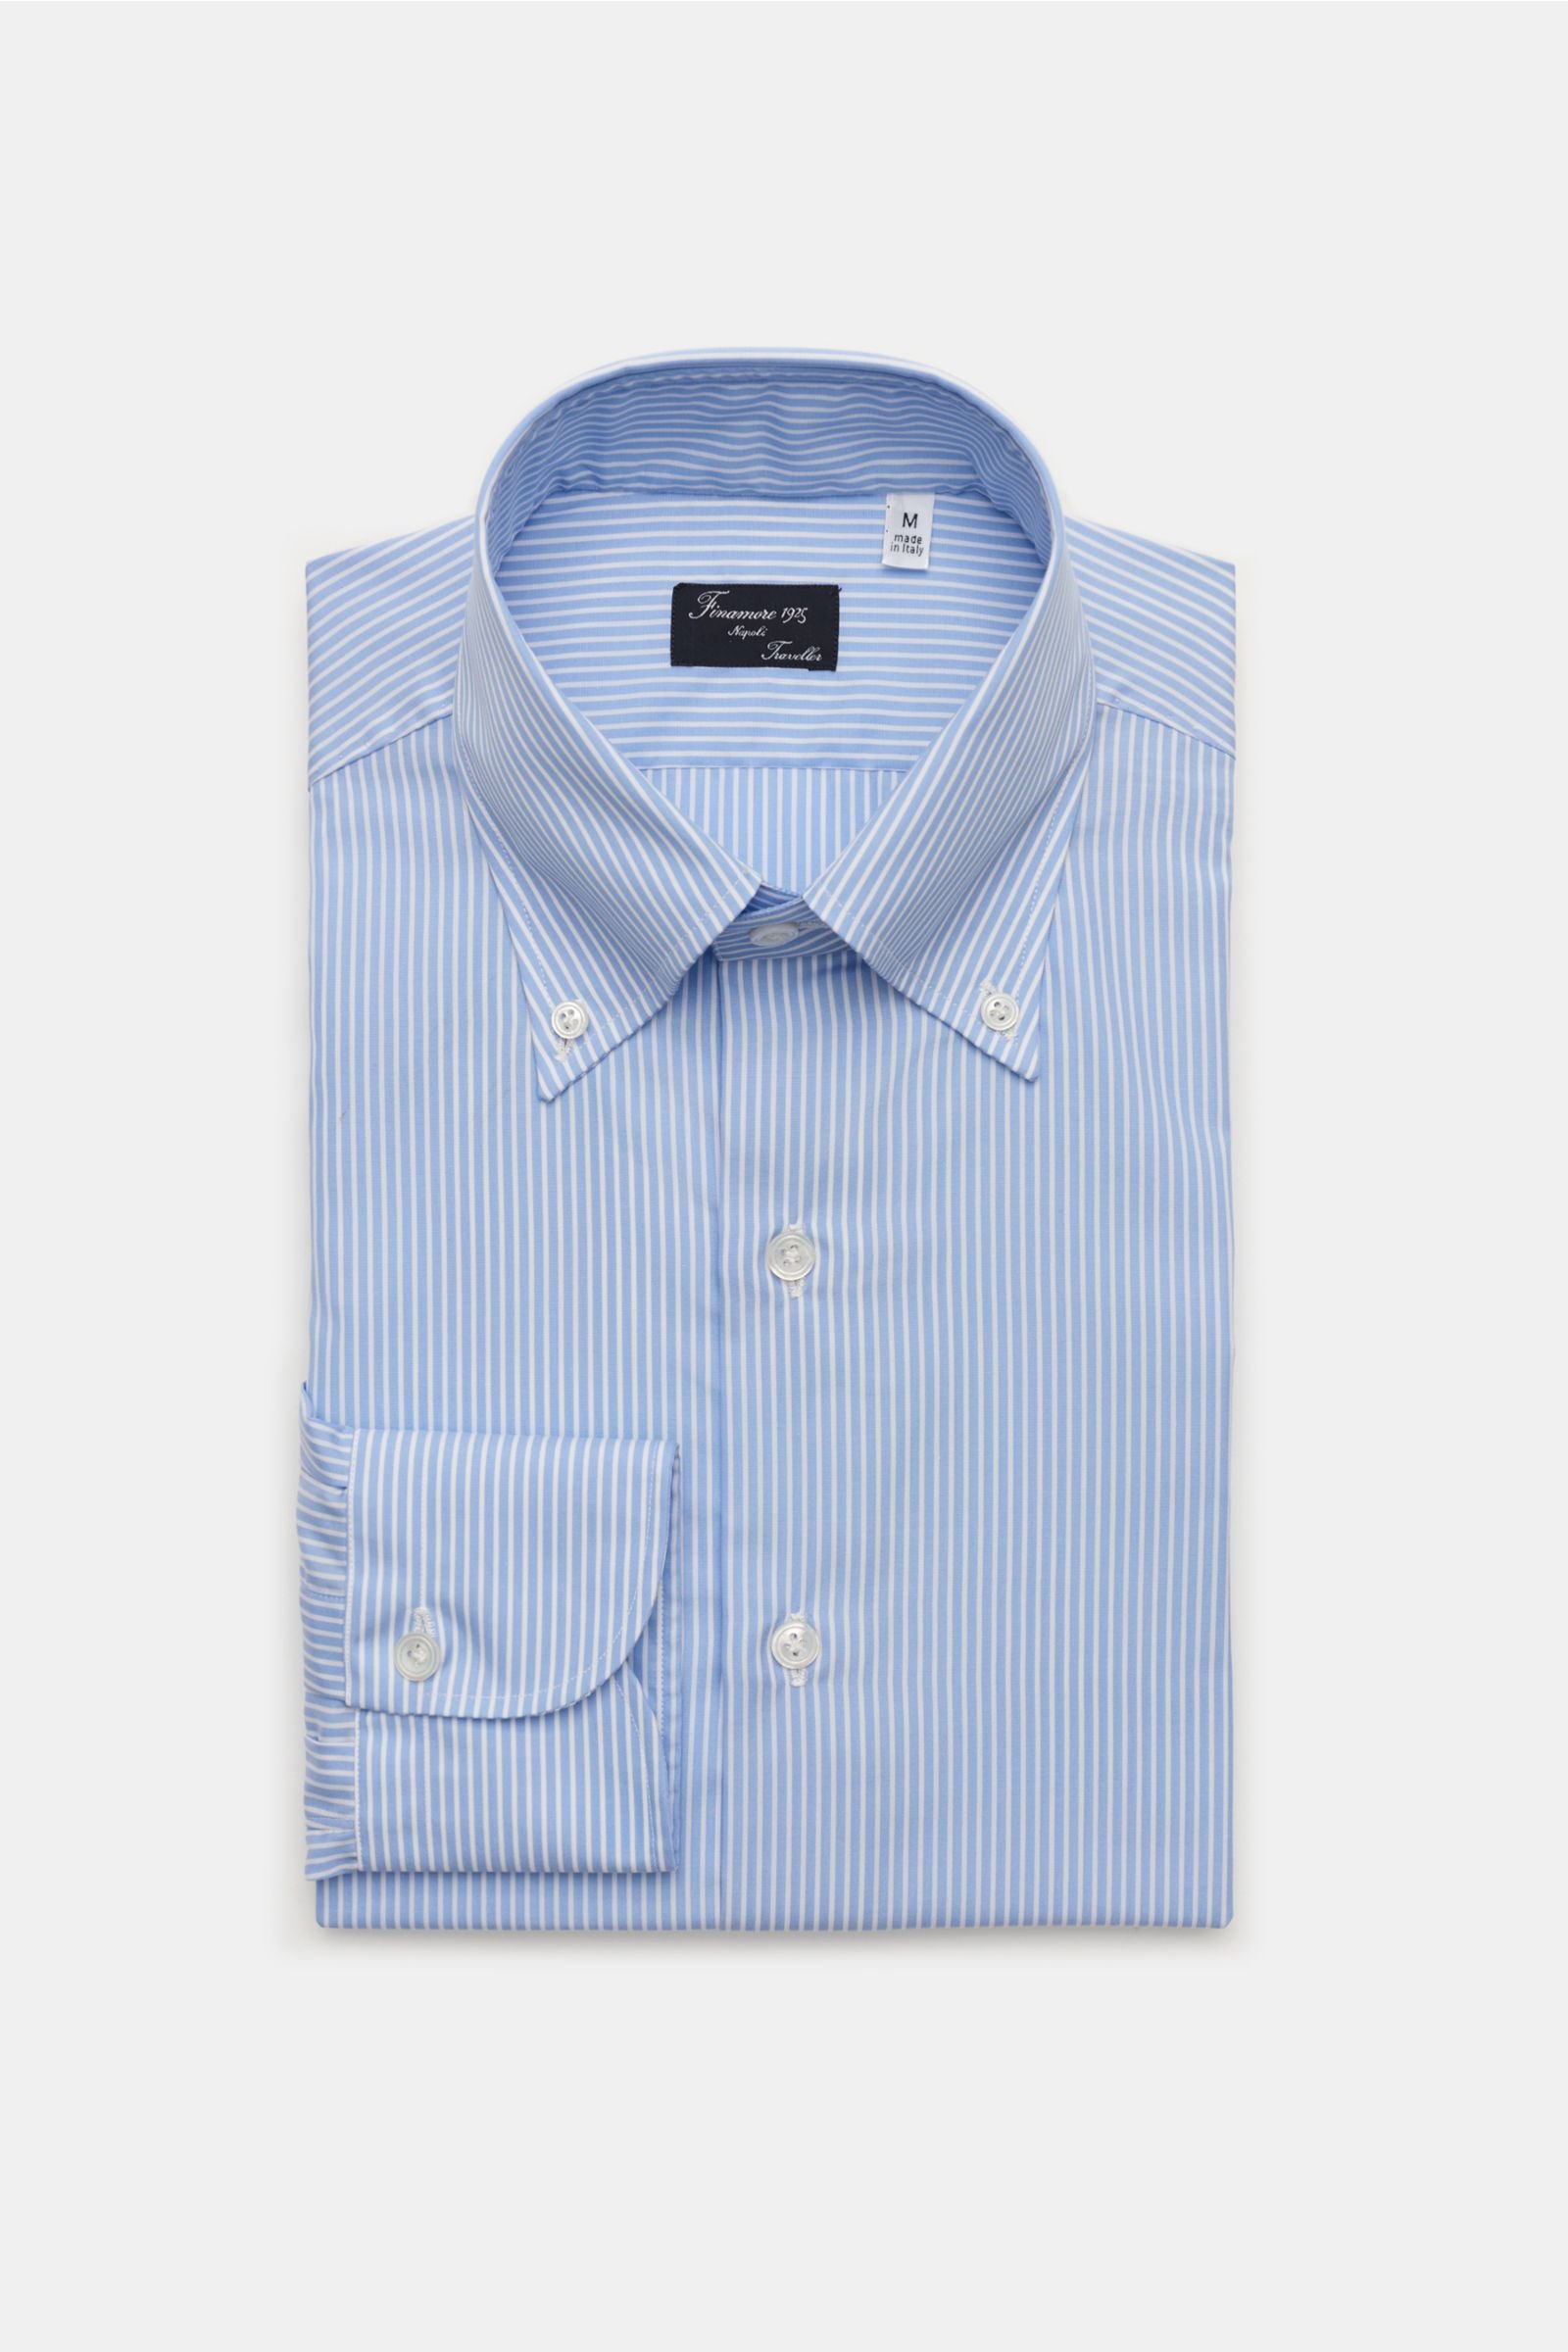 Business shirt 'Lucio Napoli' button-down collar light blue/white striped